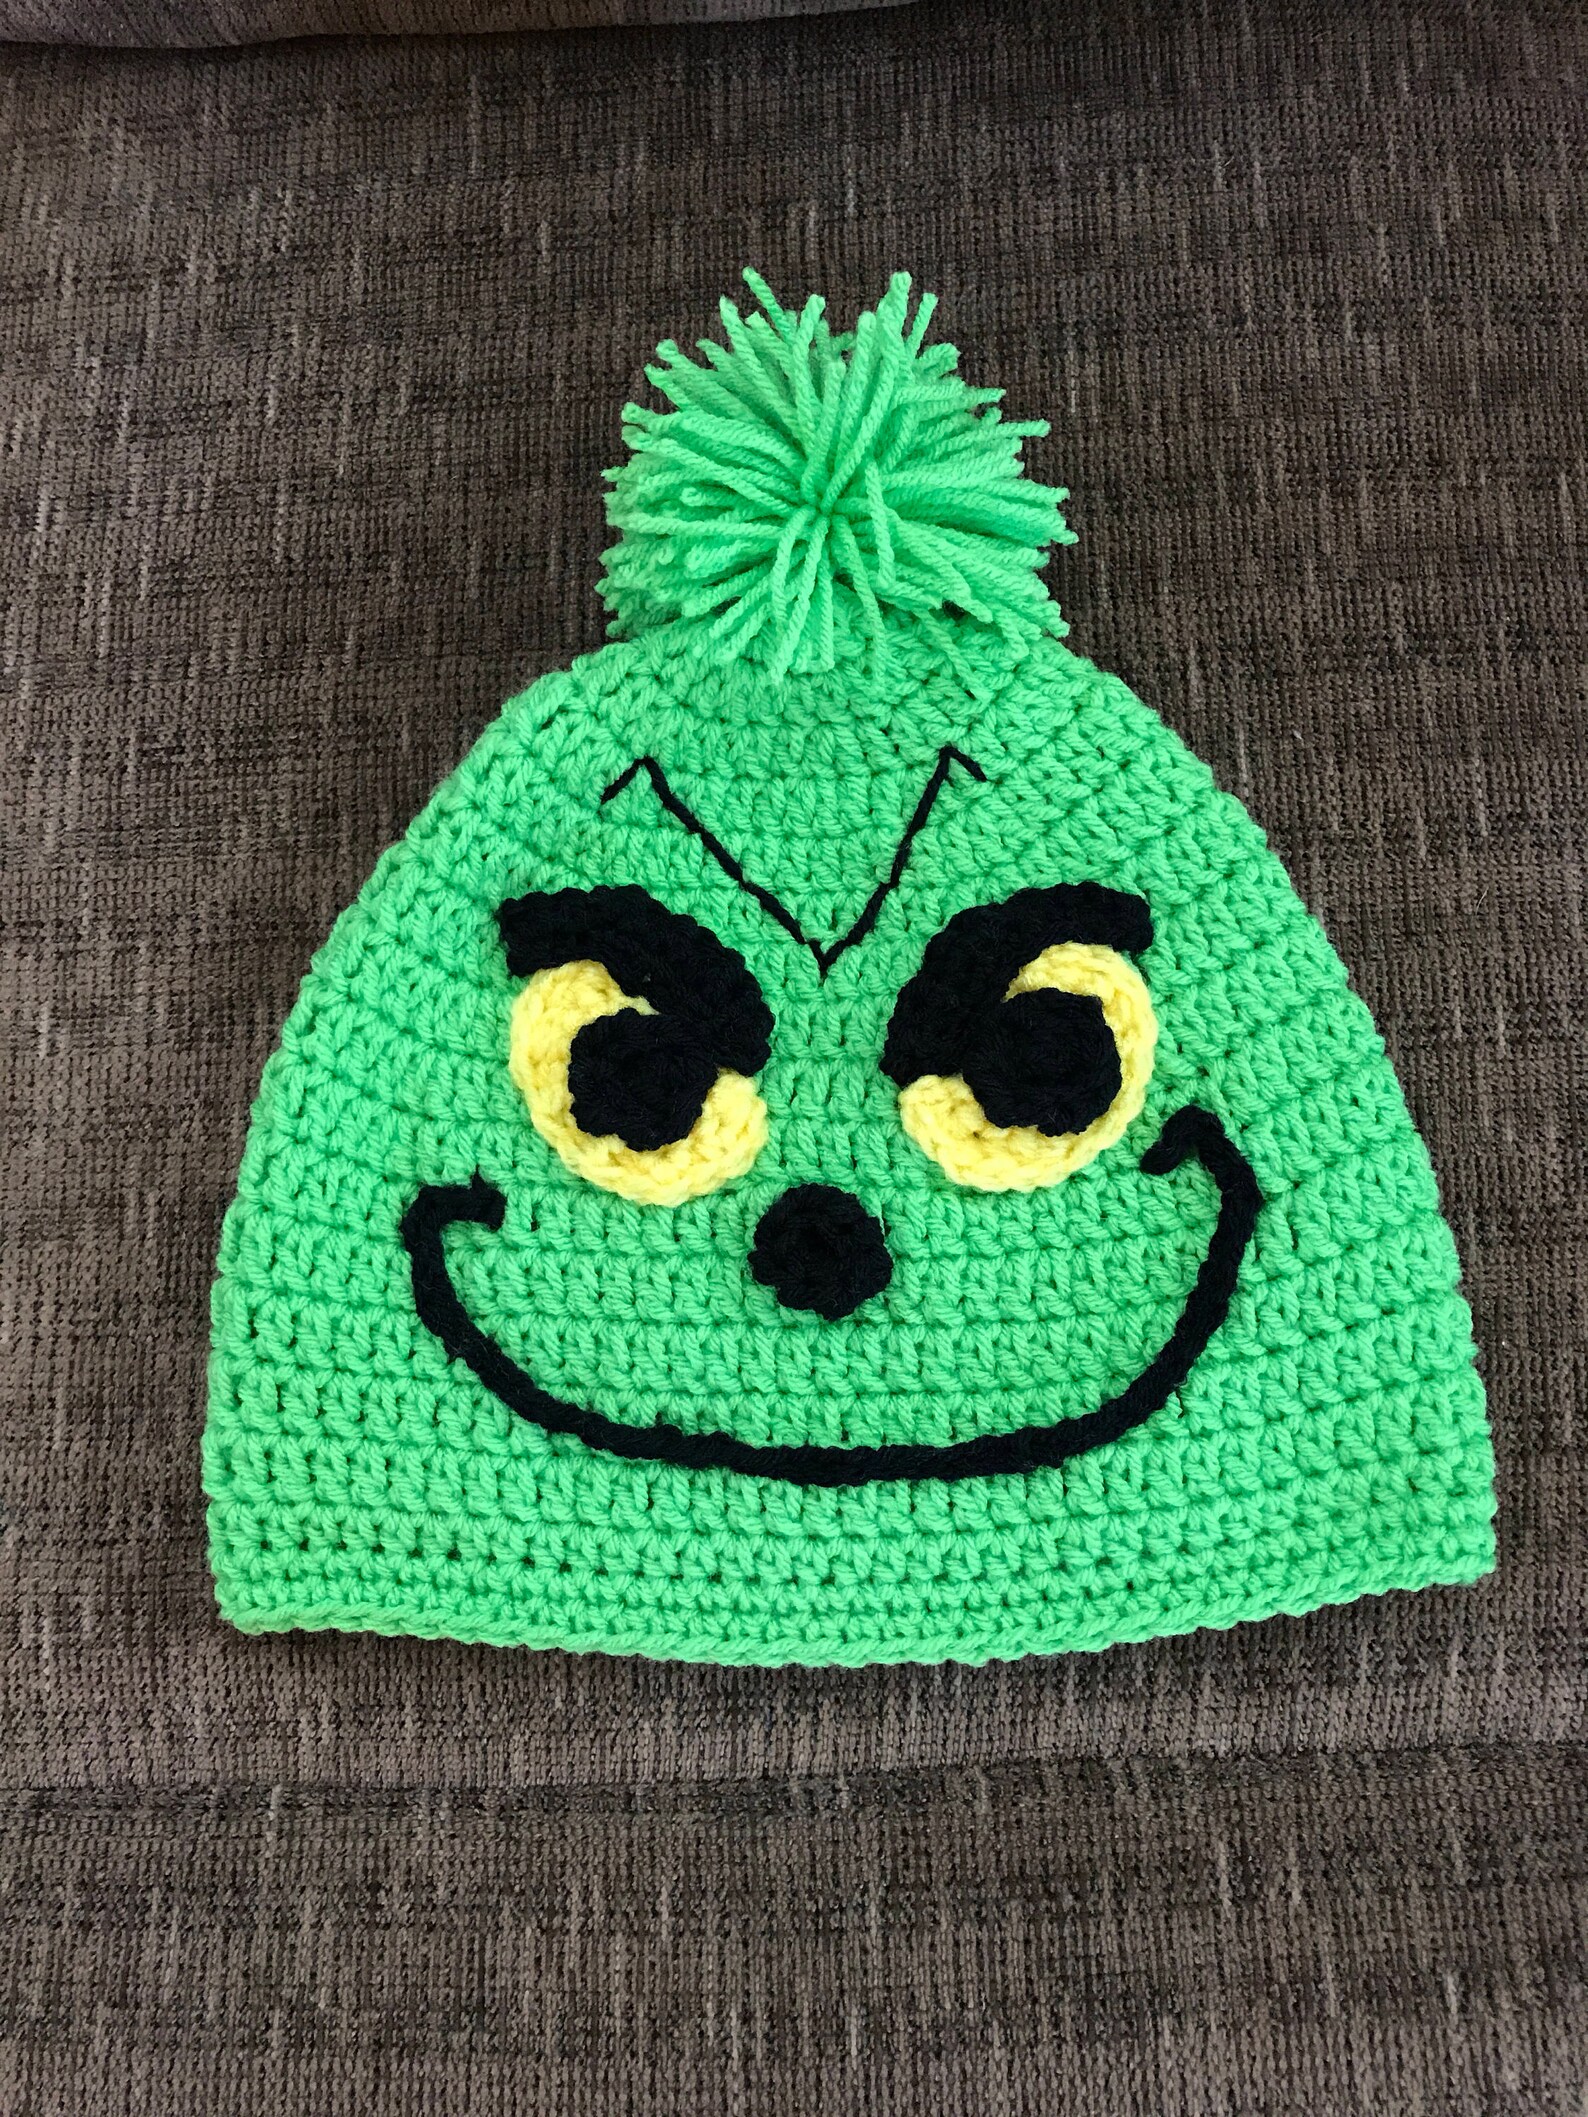 Grinch Hat | Etsy